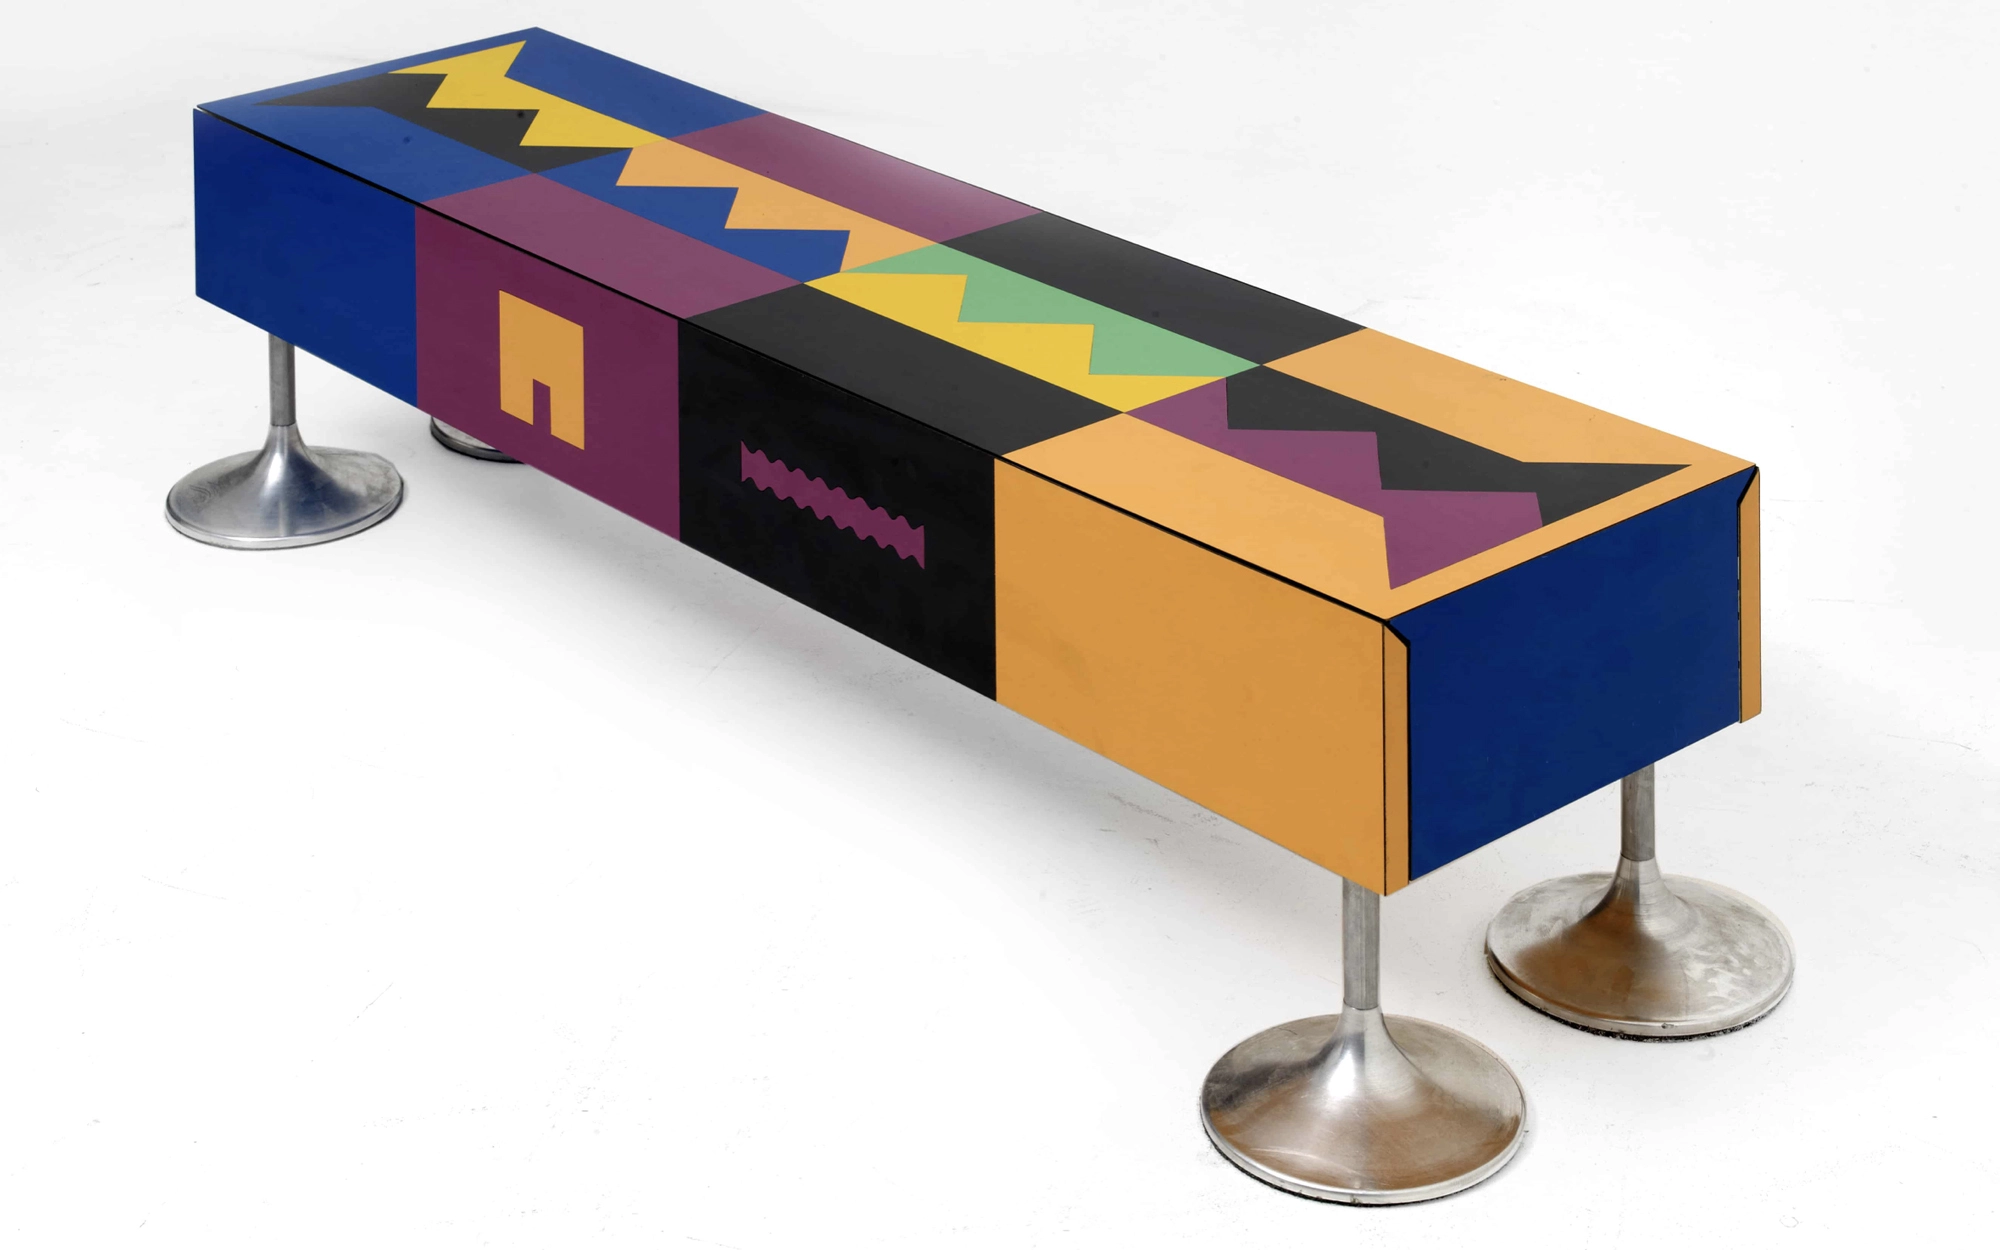 Ollo coffee table - Mendini and Gregori - Lucas Ratton x kamel mennour x Galerie kreo @Saint-Tropez.